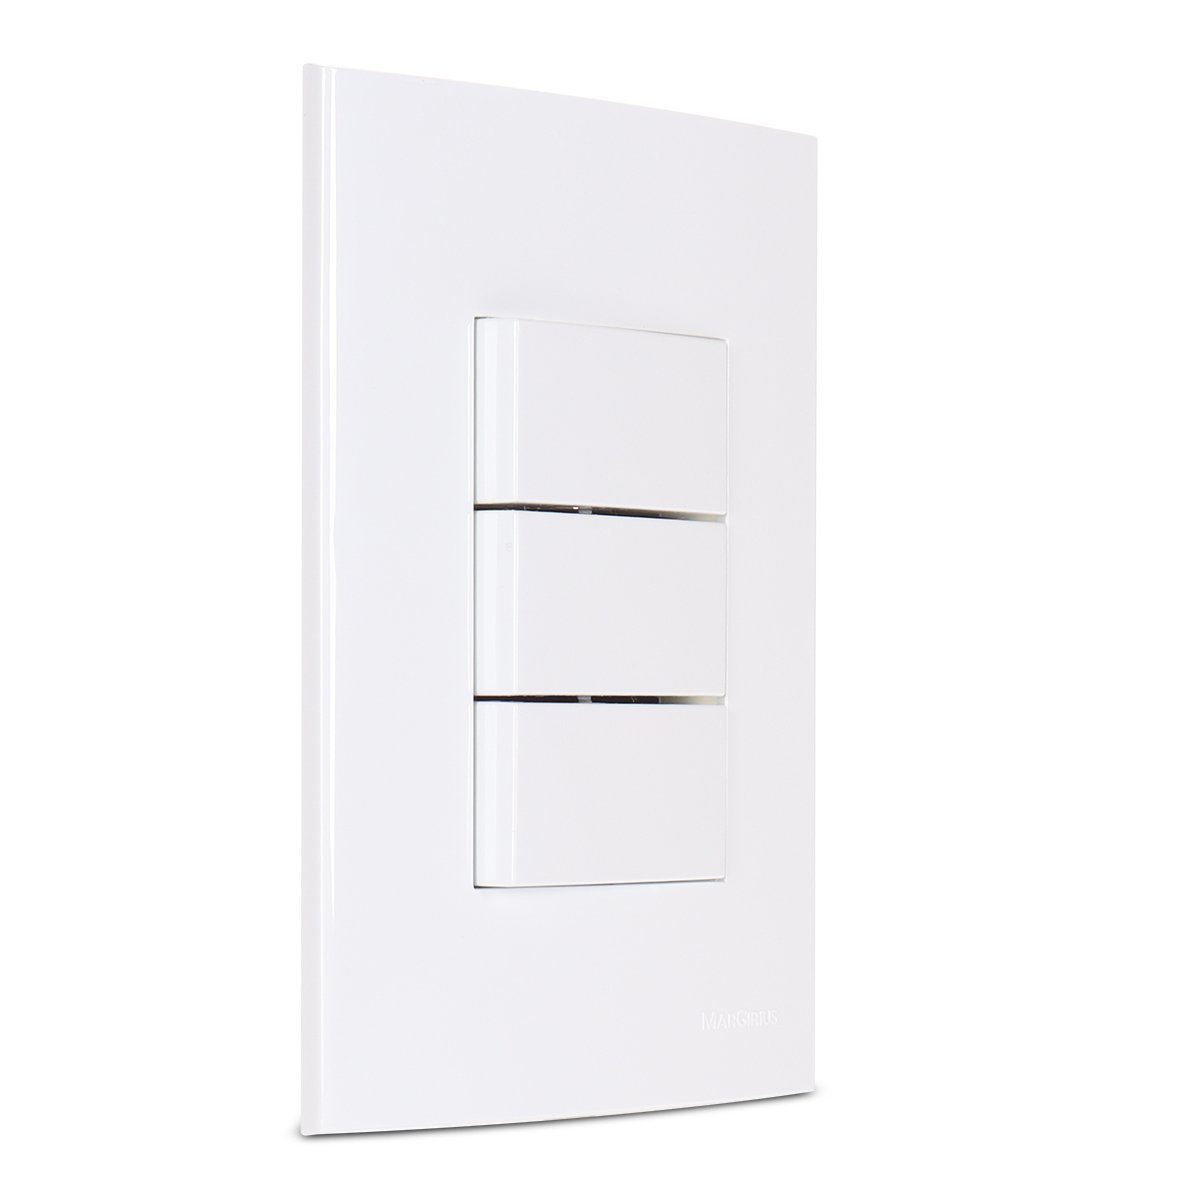 Interruptor Triplo Simples Modular Branco Sleek Margirius Cor:branco